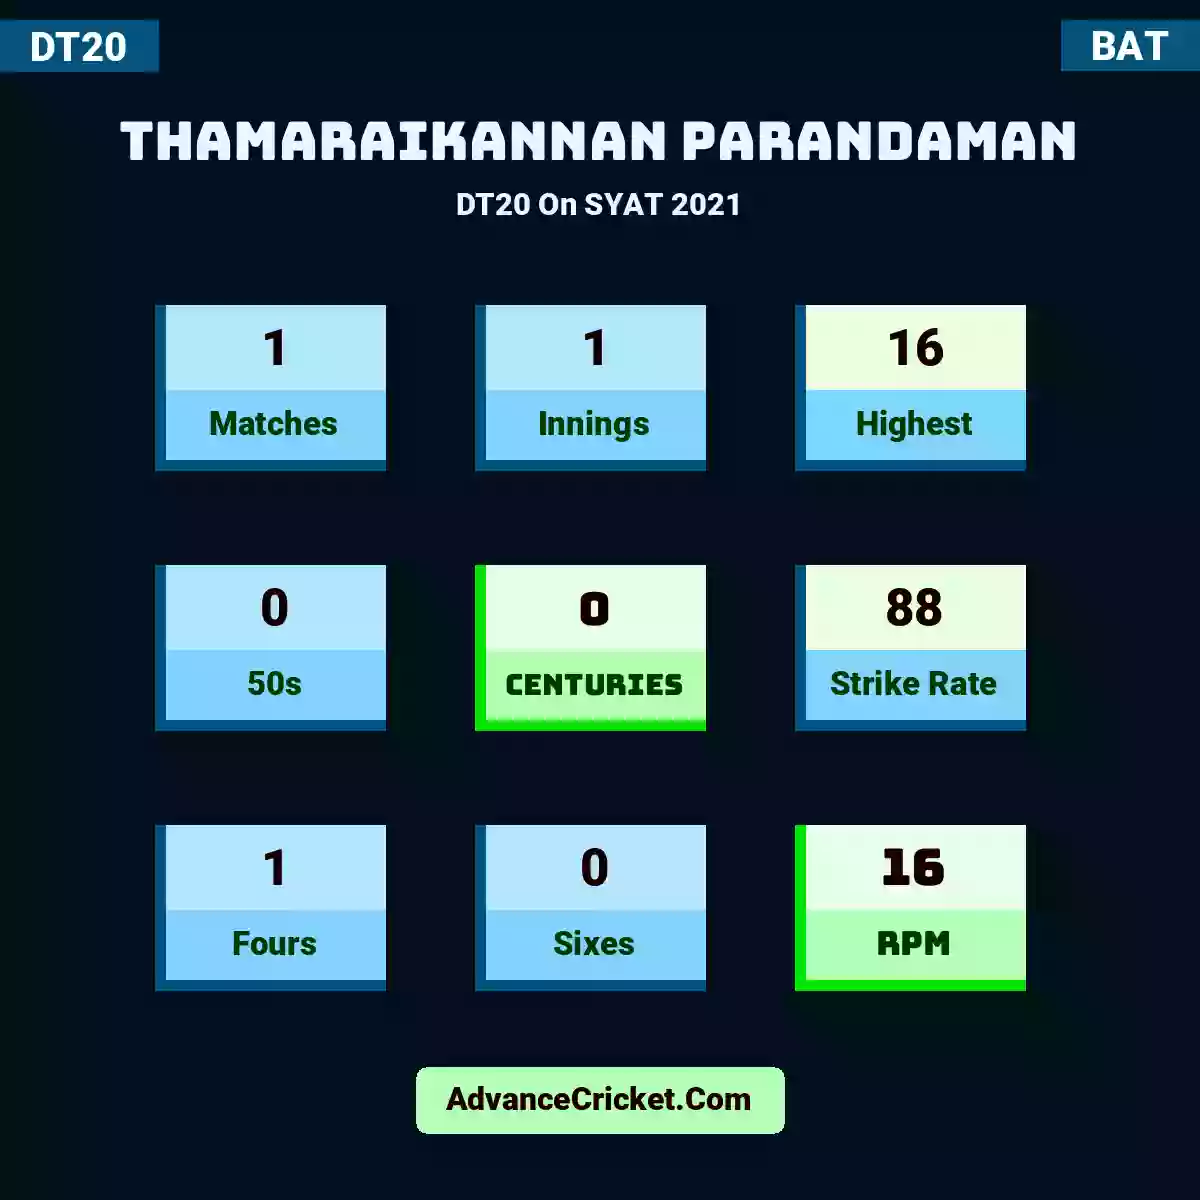 Thamaraikannan Parandaman DT20  On SYAT 2021, Thamaraikannan Parandaman played 1 matches, scored 16 runs as highest, 0 half-centuries, and 0 centuries, with a strike rate of 88. T.Parandaman hit 1 fours and 0 sixes, with an RPM of 16.